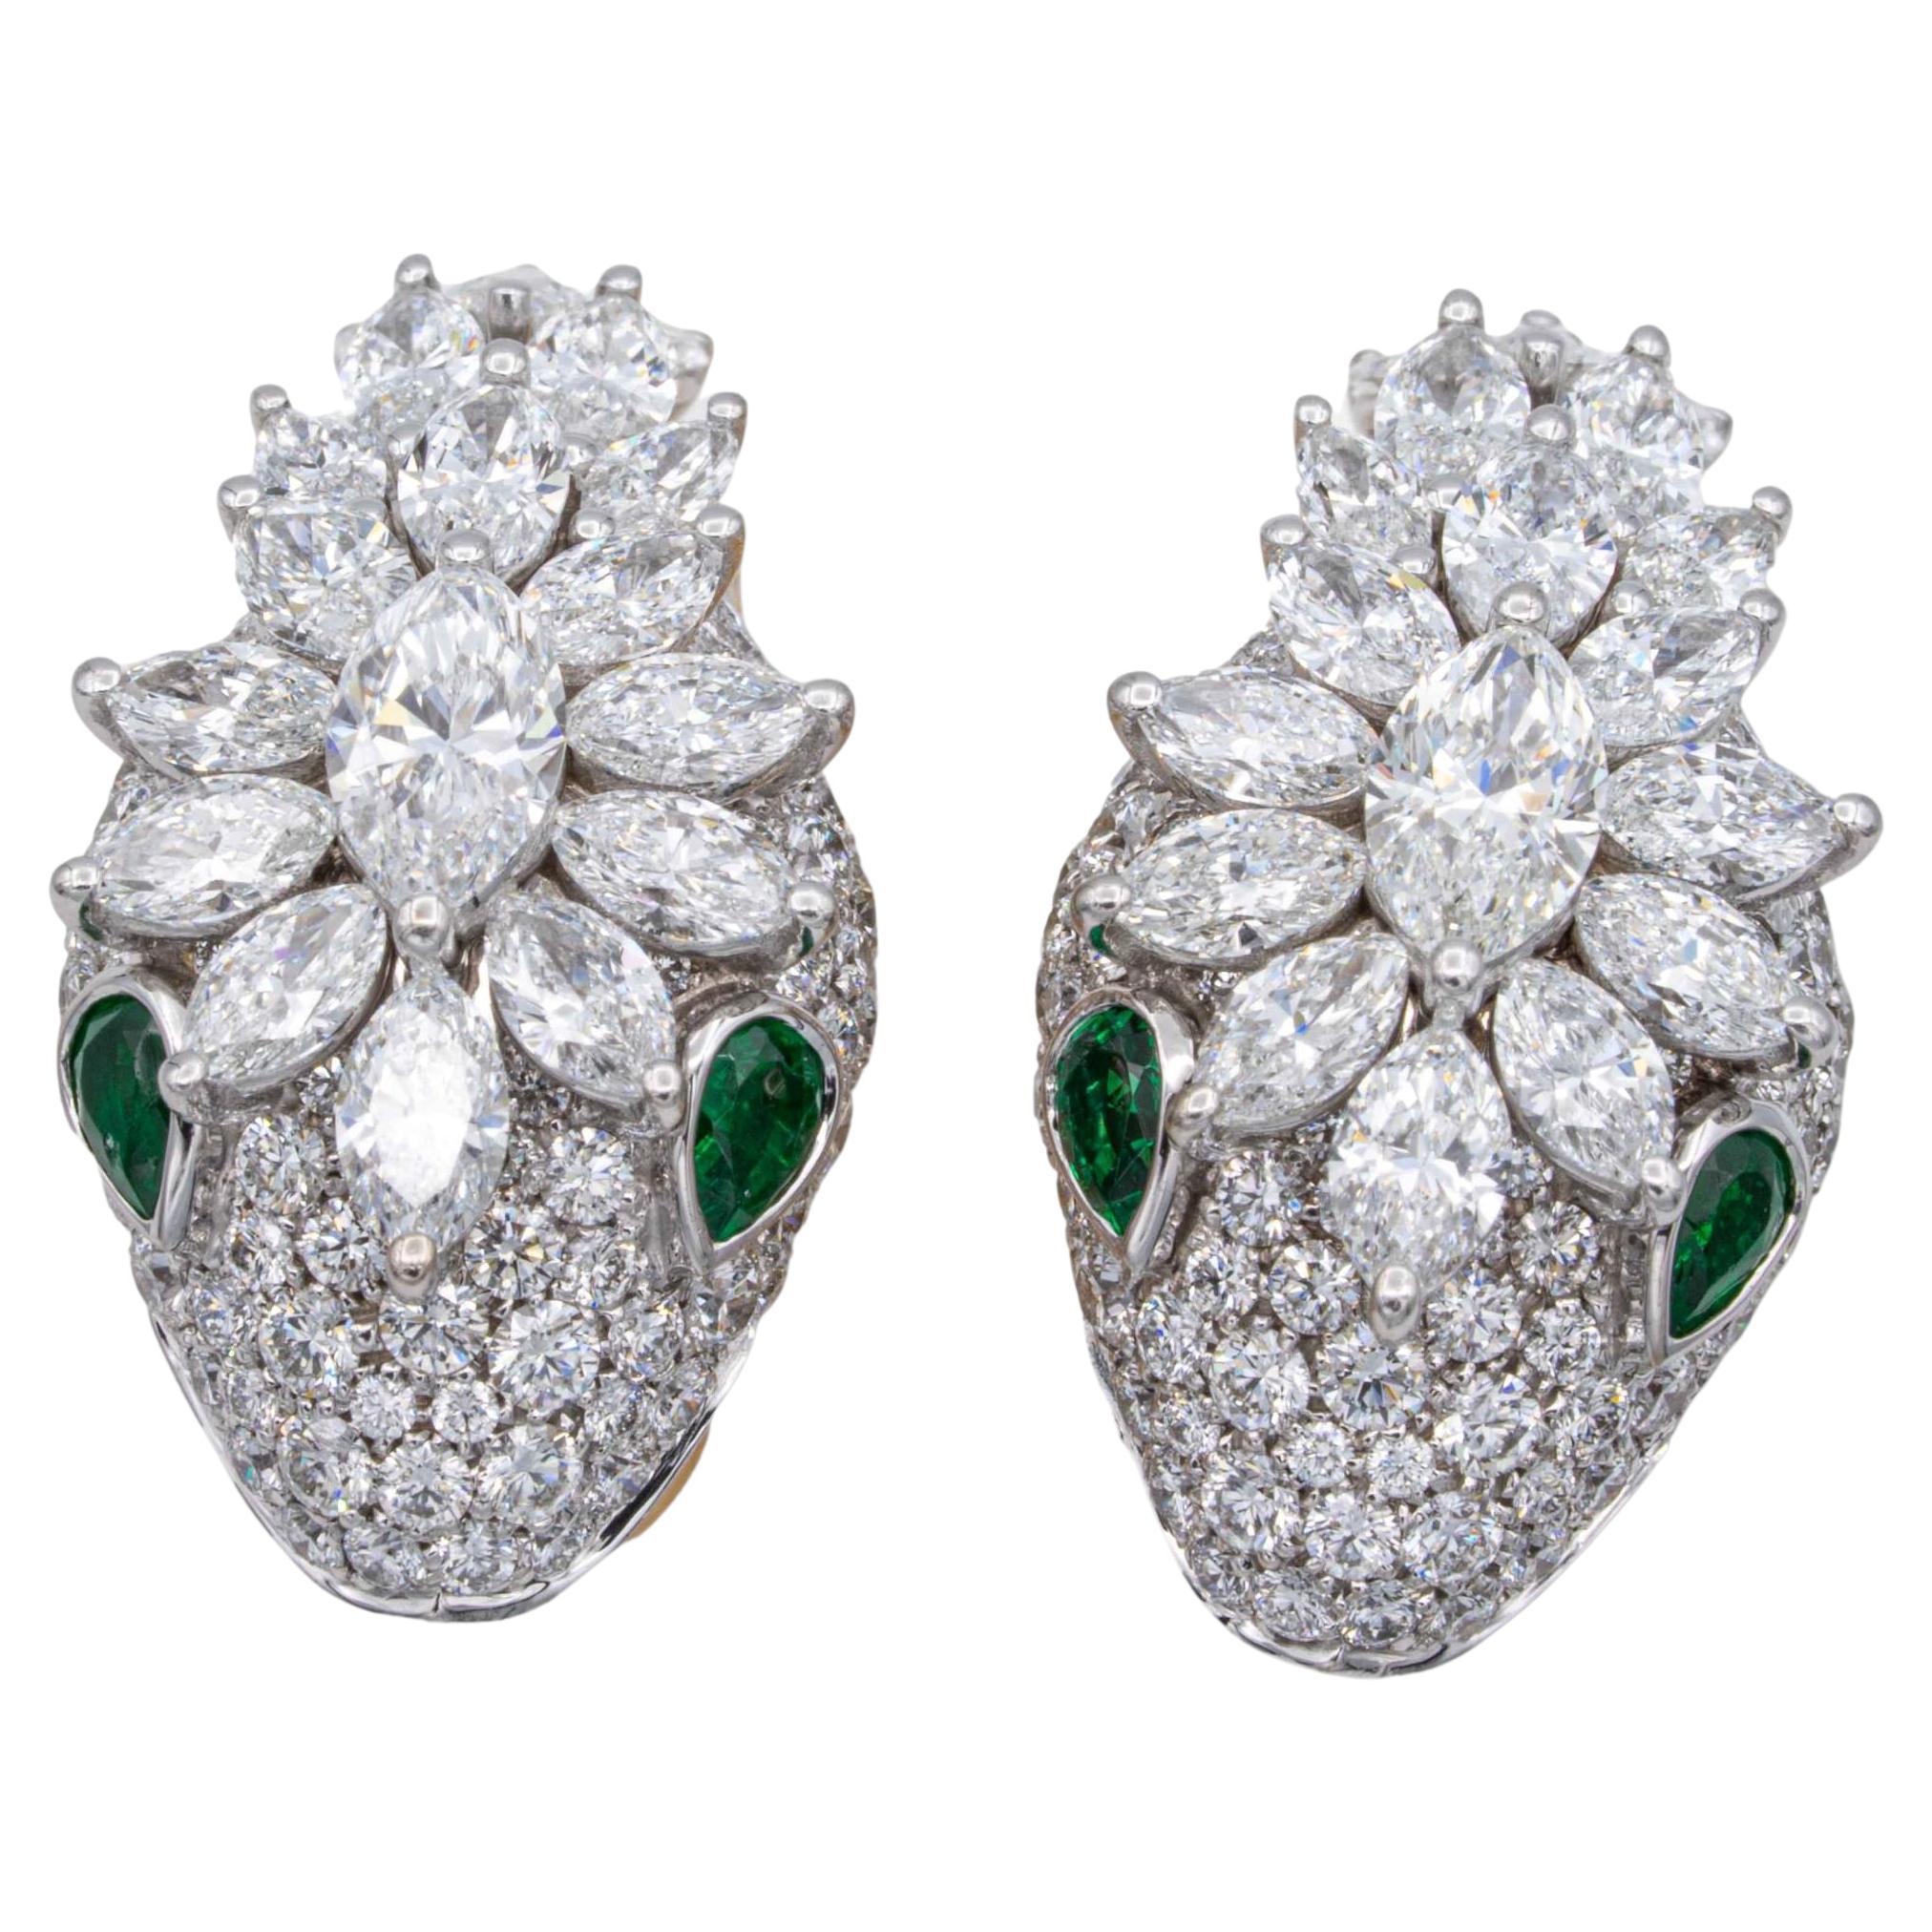 Bvlgari Serpenti Platinum and 18K Yellow Gold Diamond Earrings with Emerald Eyes